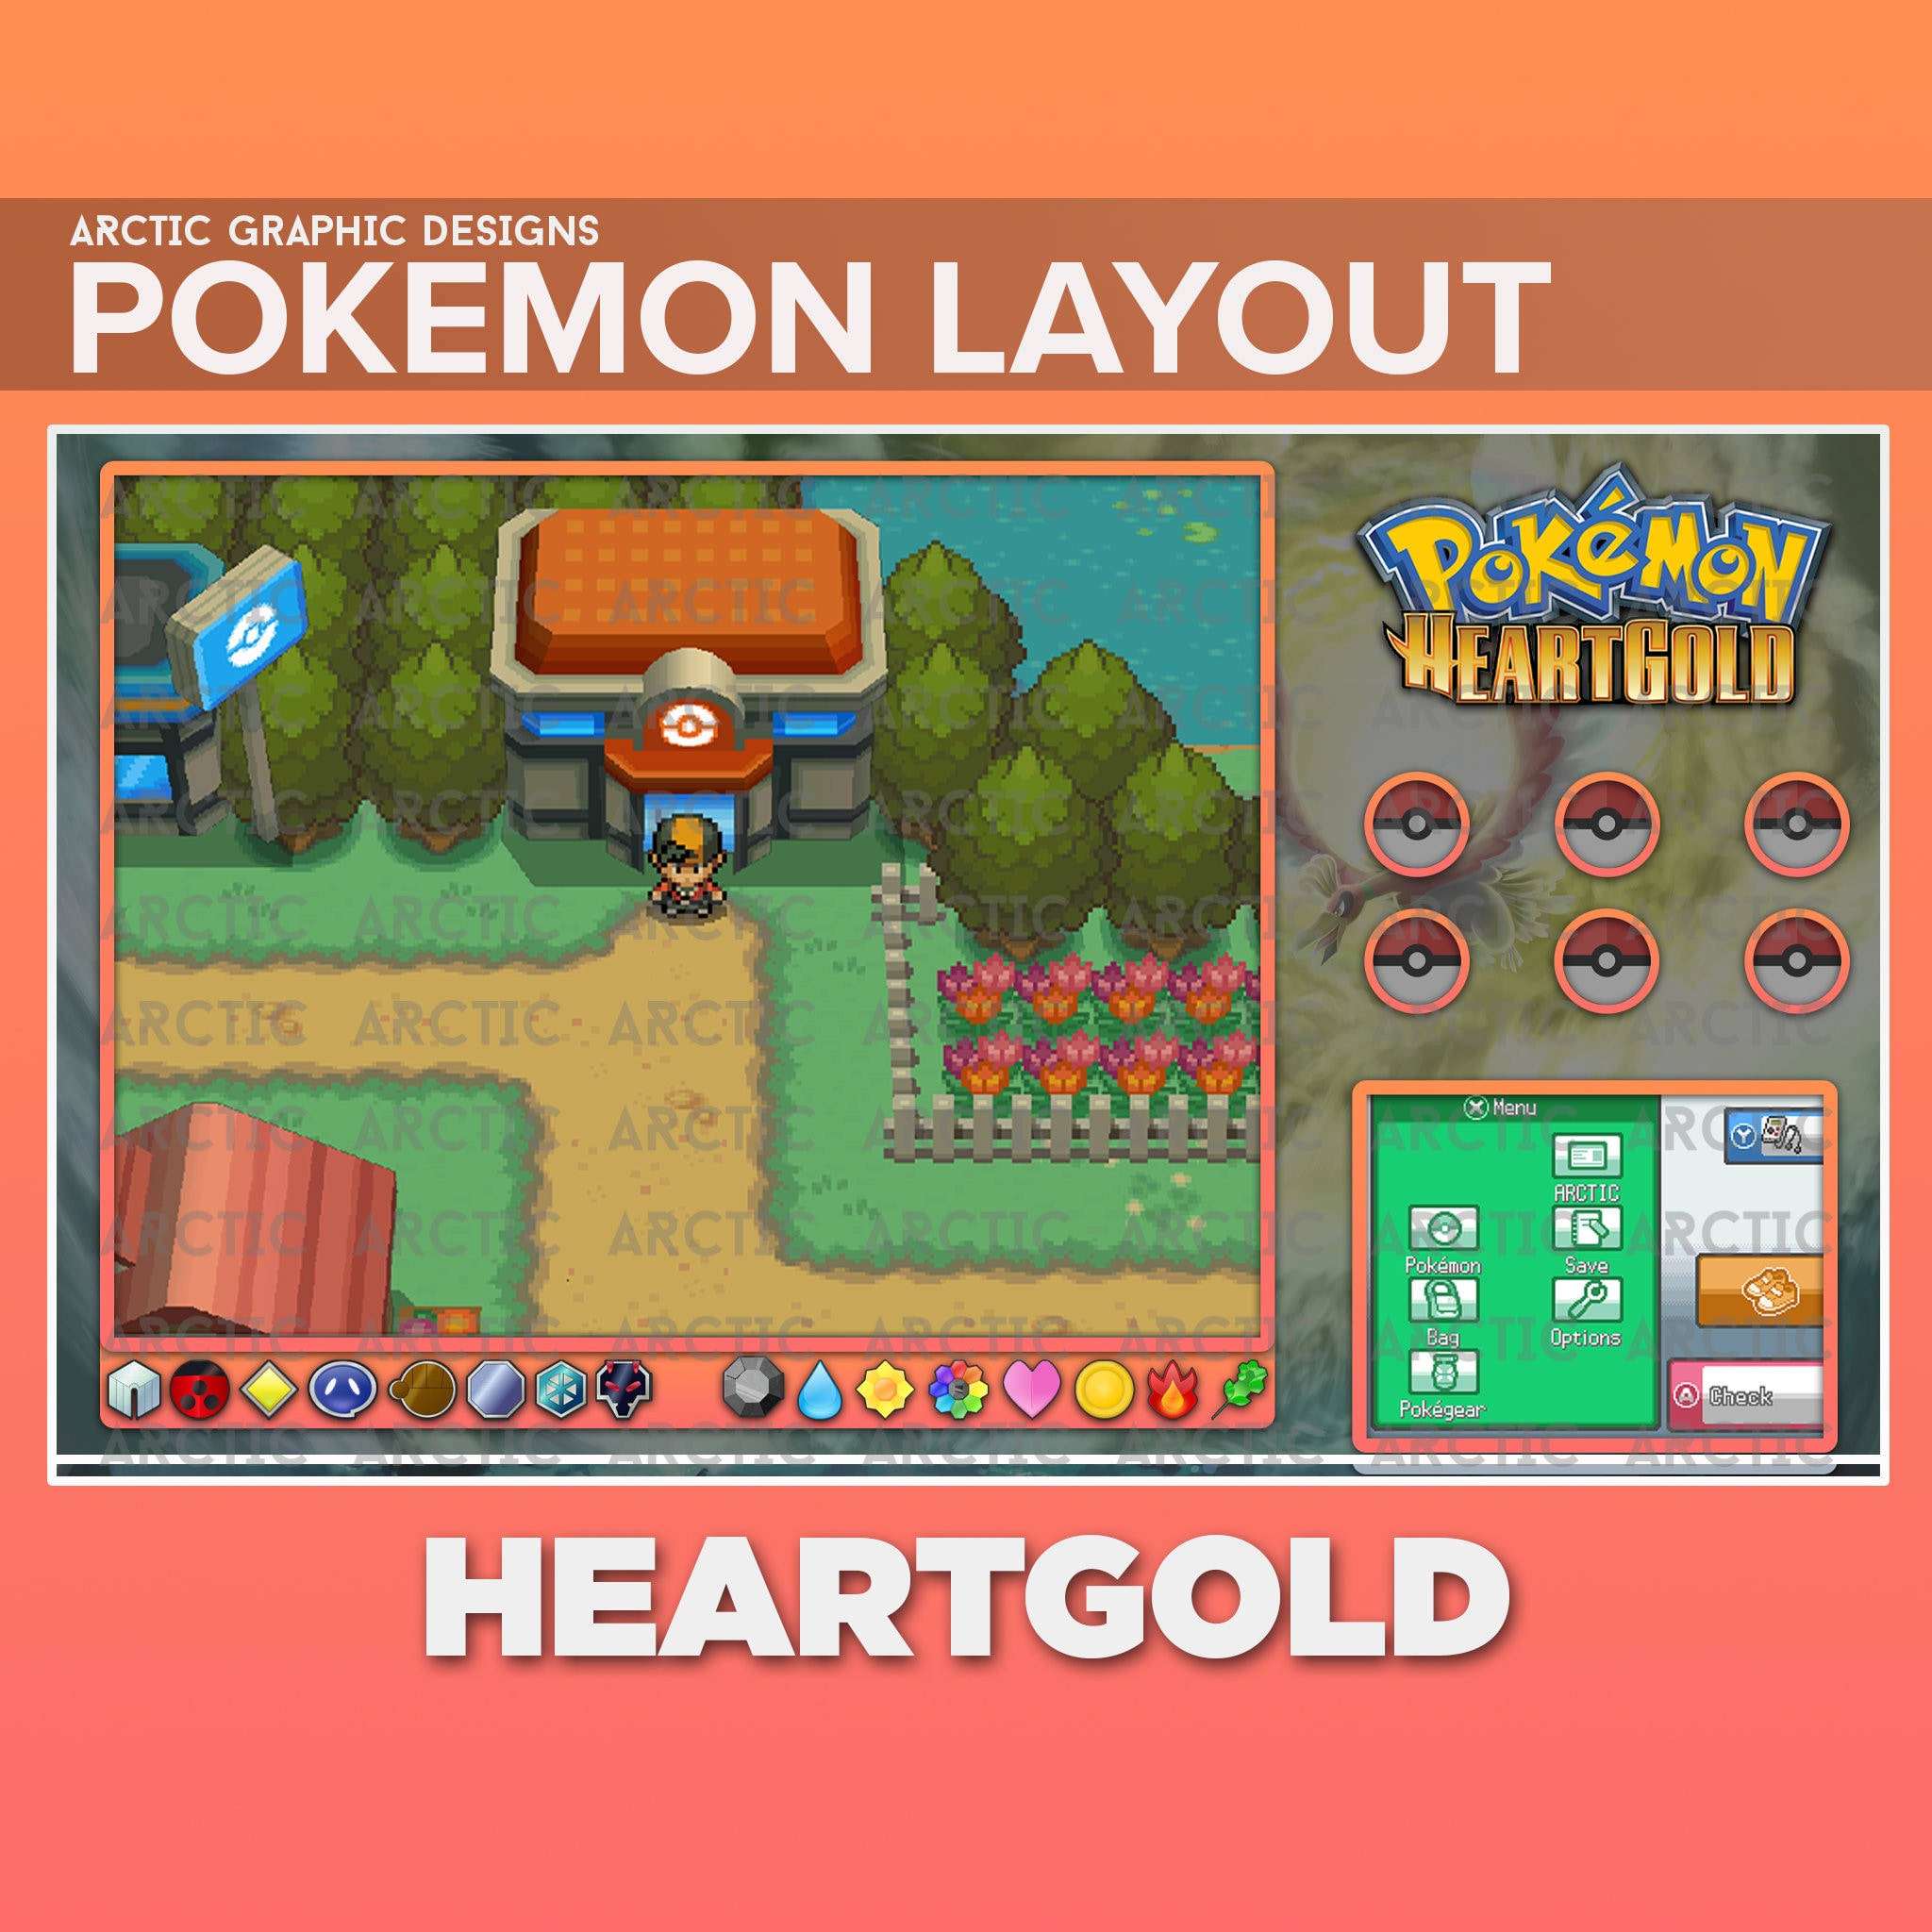 User Interface in Pokemon HeartGold